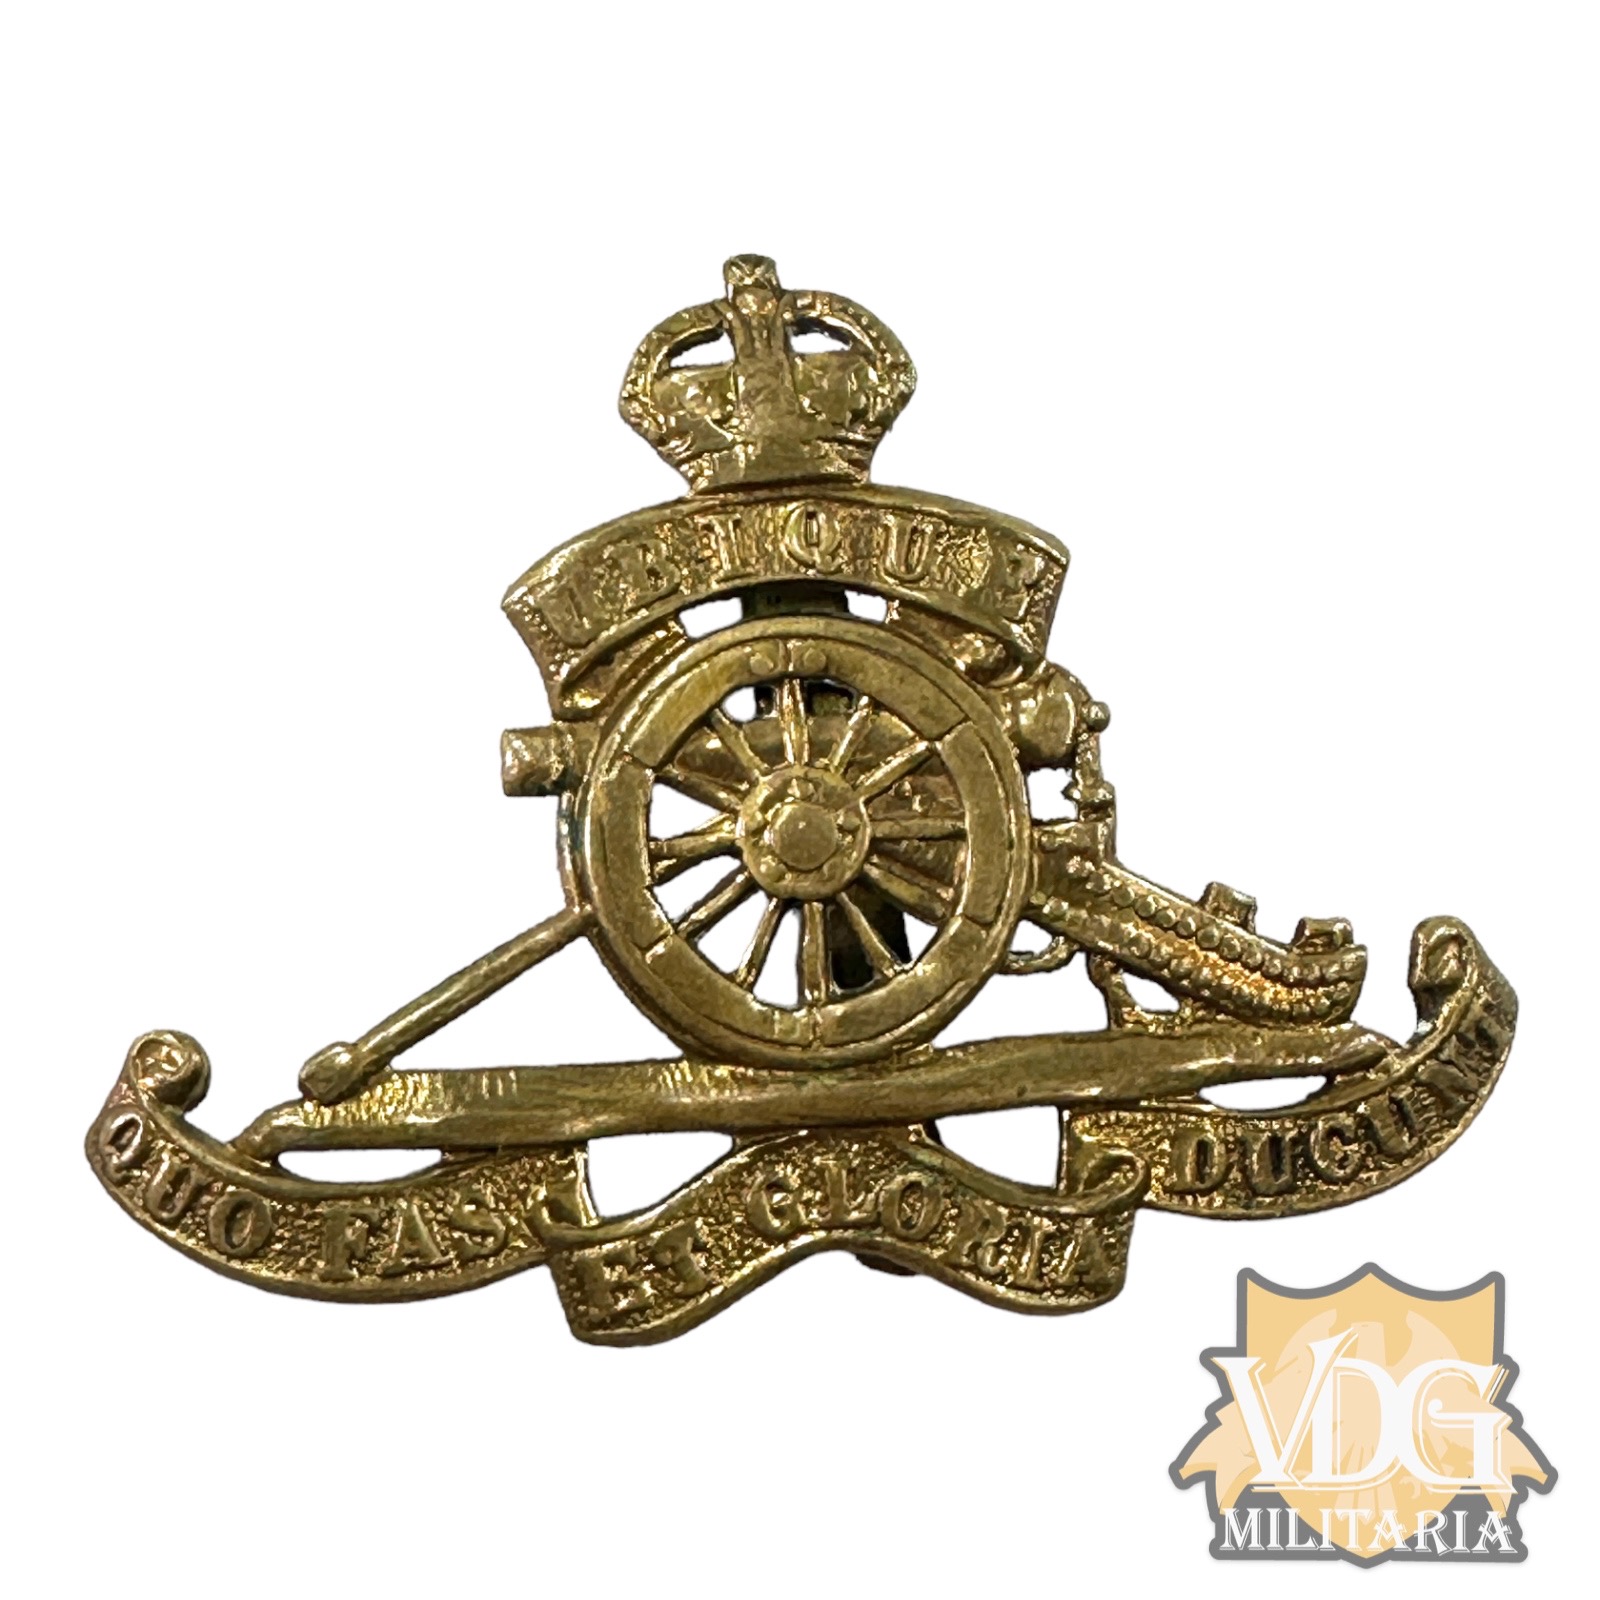 WW2 British Army Artillery Cap Badge | VDG Militaria